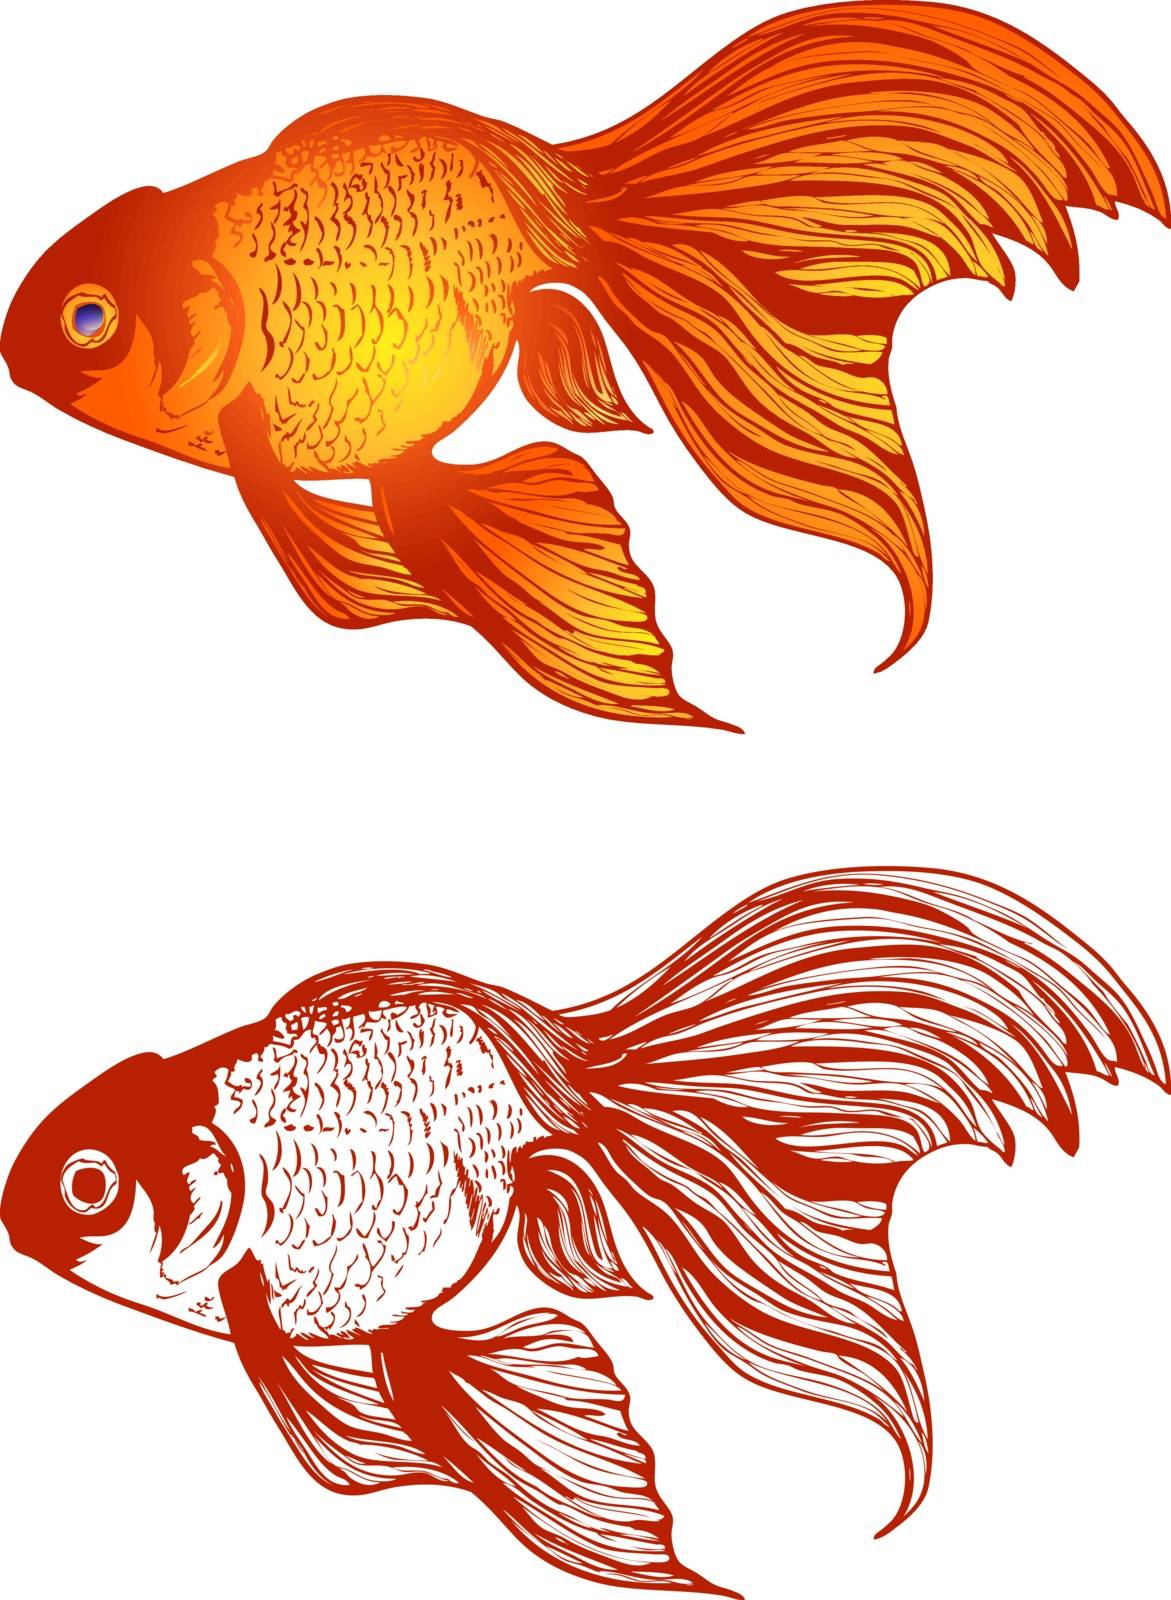 Illustration of Gold Fish Variations Over White Background